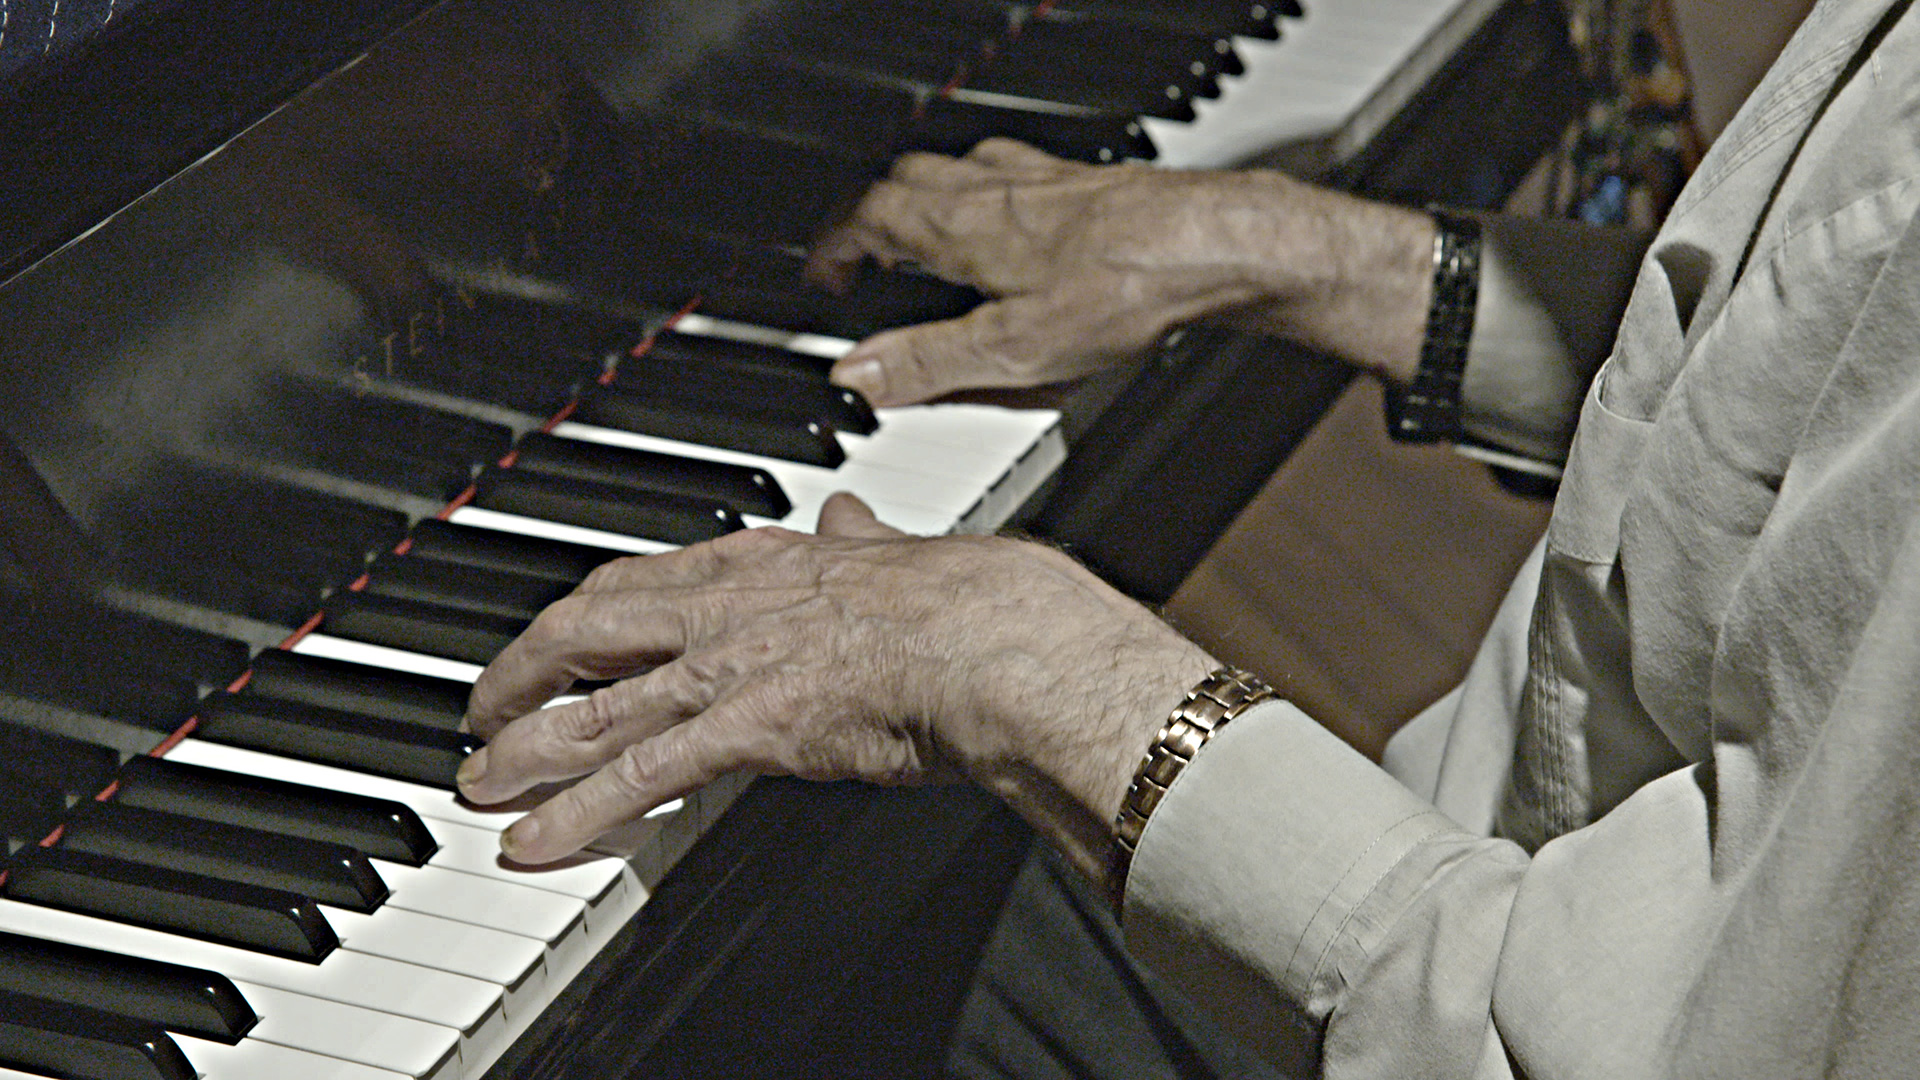 Dr. John's hands on the piano (photograph by Jason Villamarette)